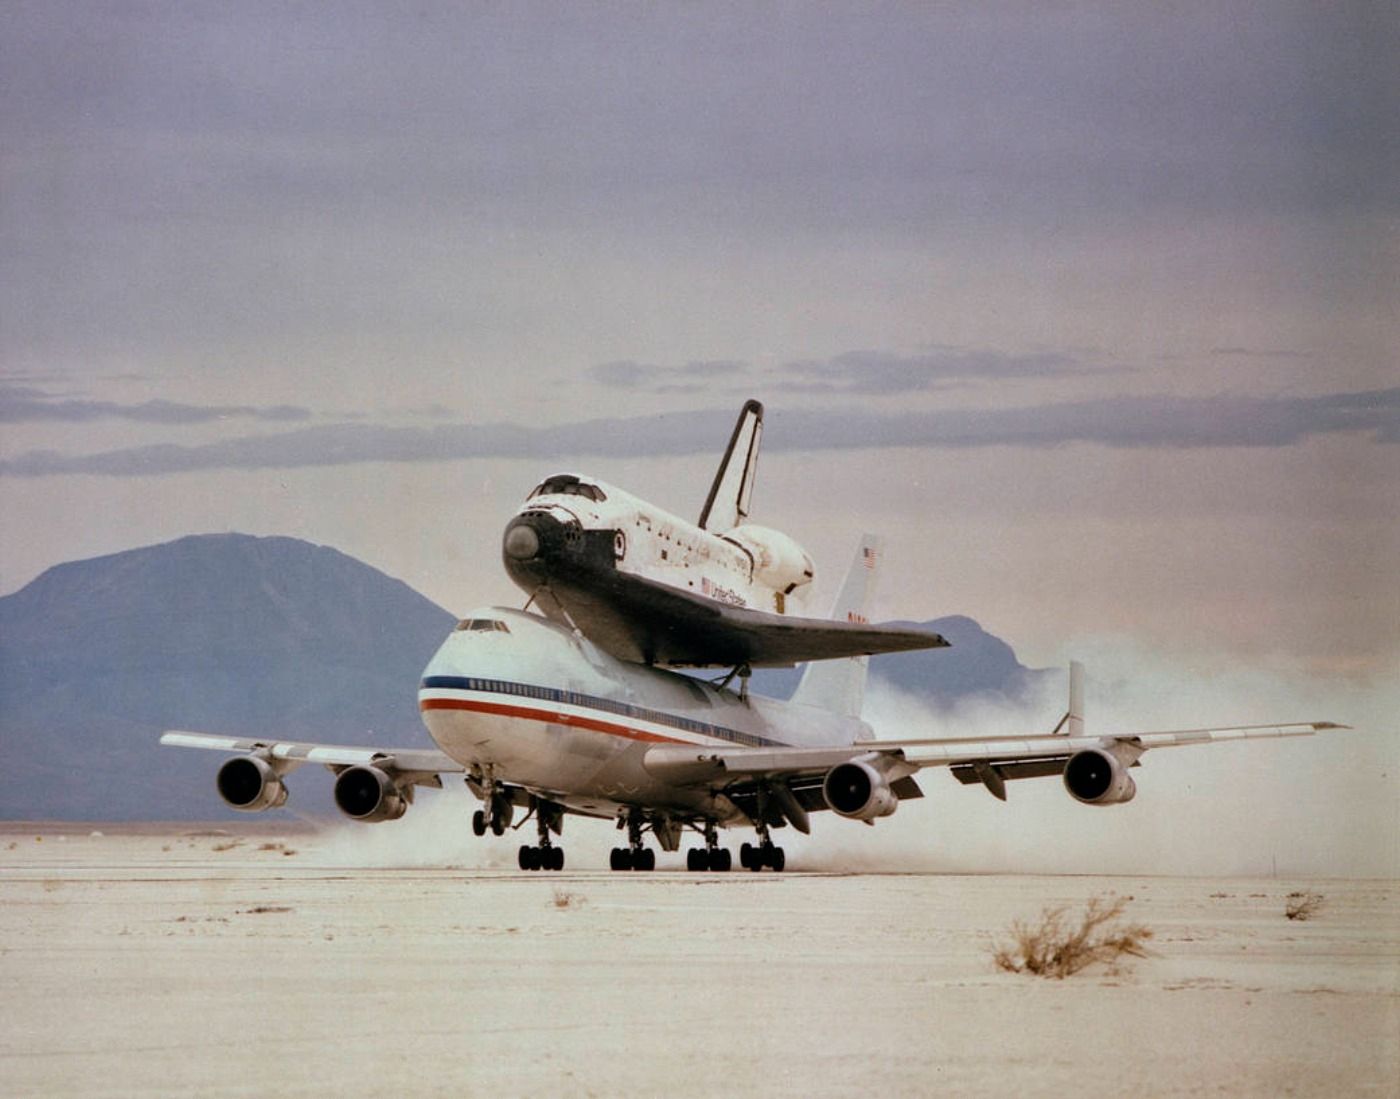 NASA's Columbia space shuttle